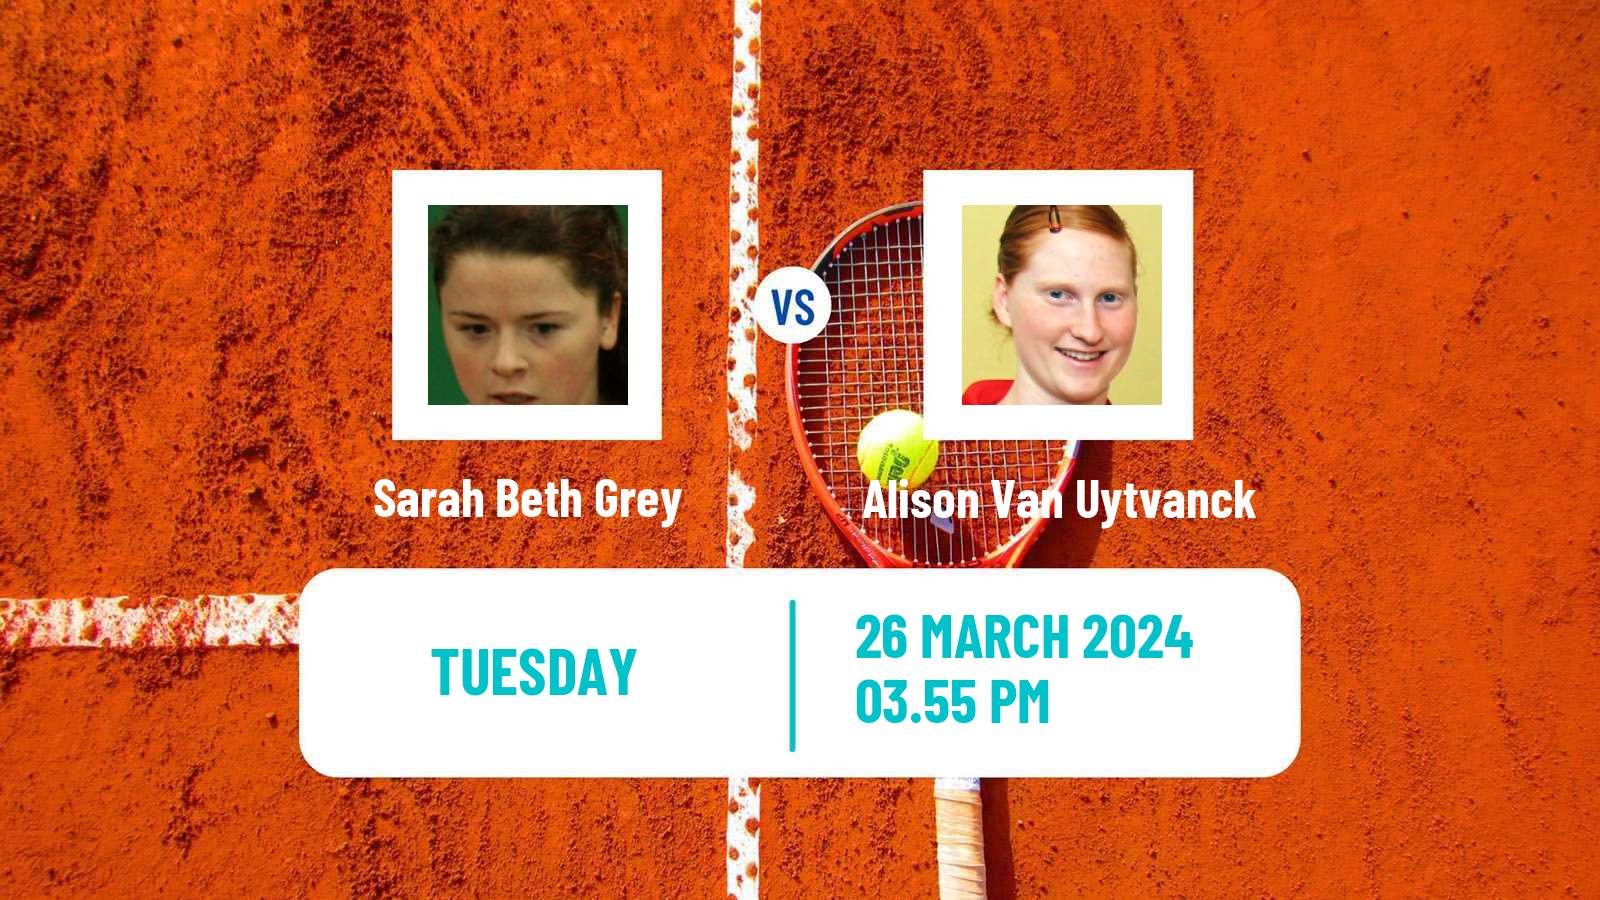 Tennis ITF W75 Croissy Beaubourg Women Sarah Beth Grey - Alison Van Uytvanck